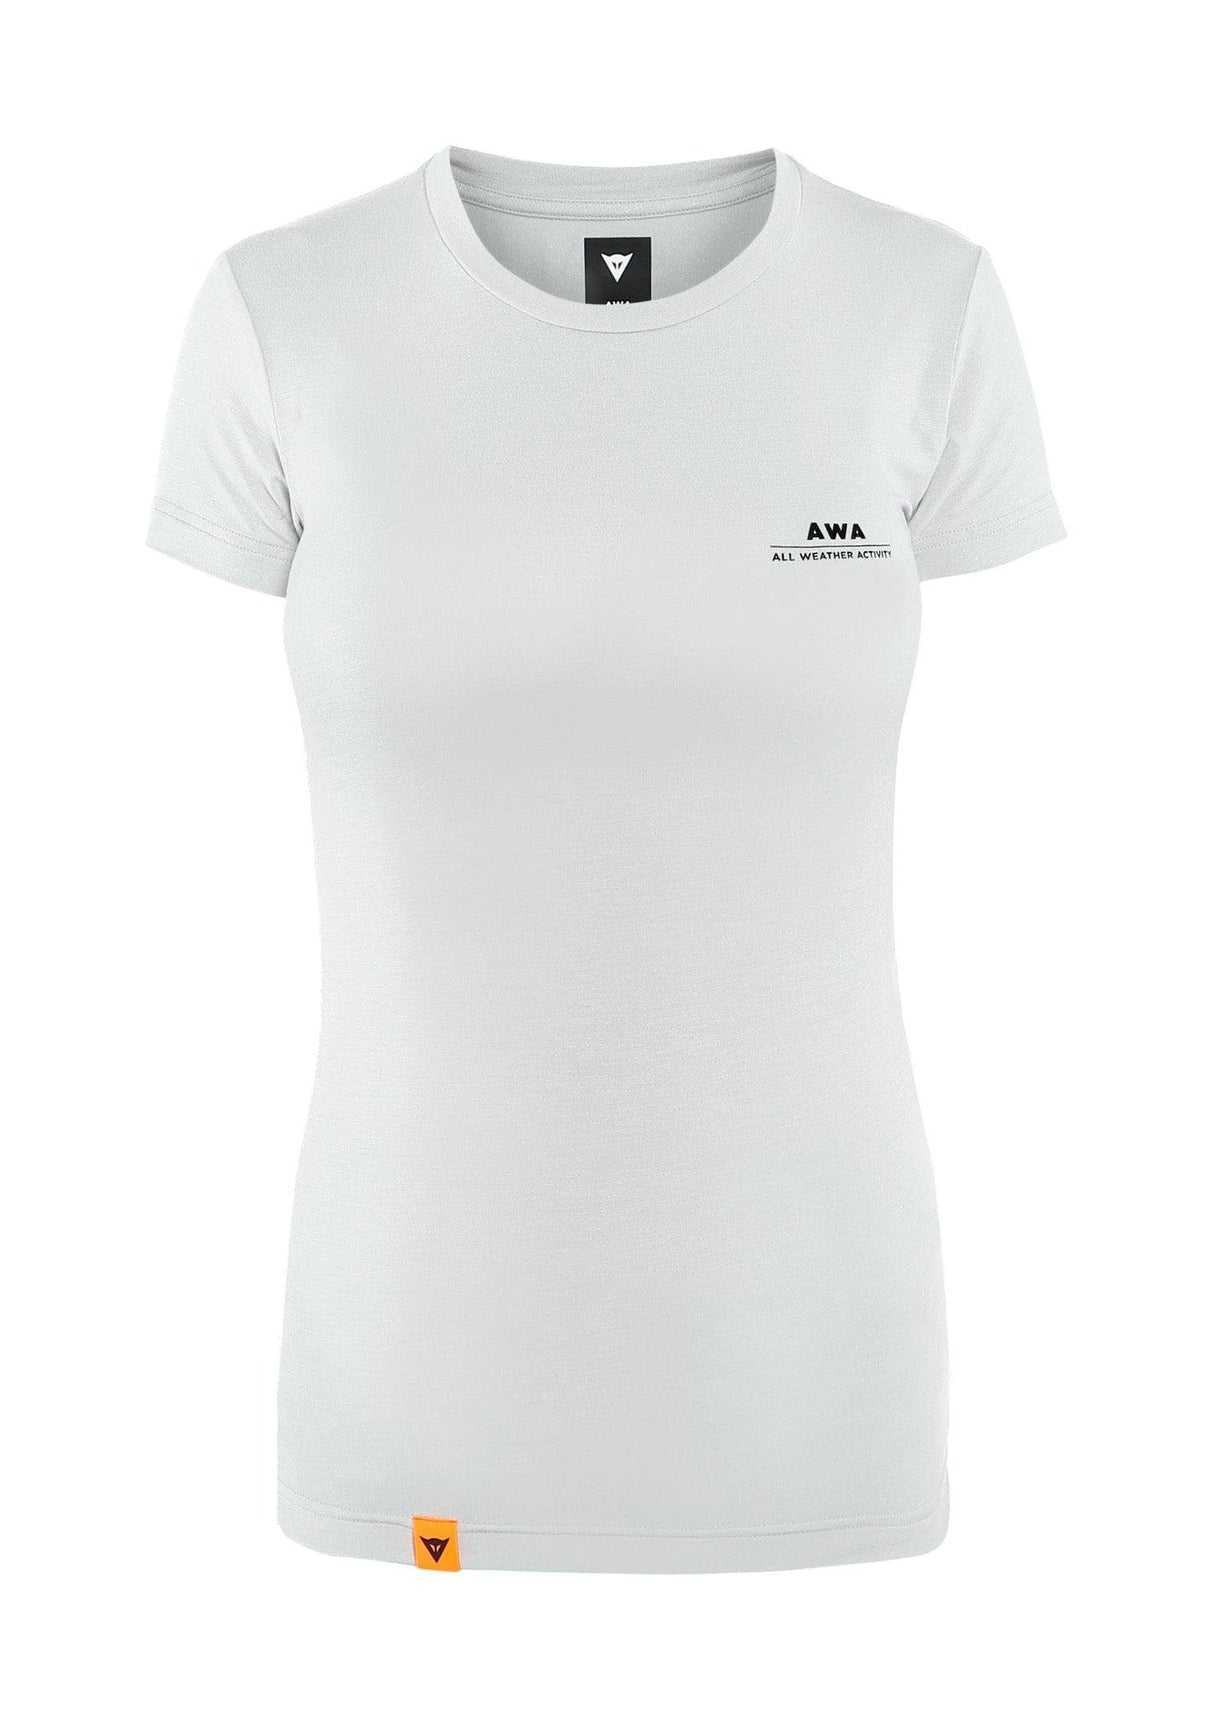 Dainese AWA BLACK Womens Tee T-Shirt (Cool Grey, S)